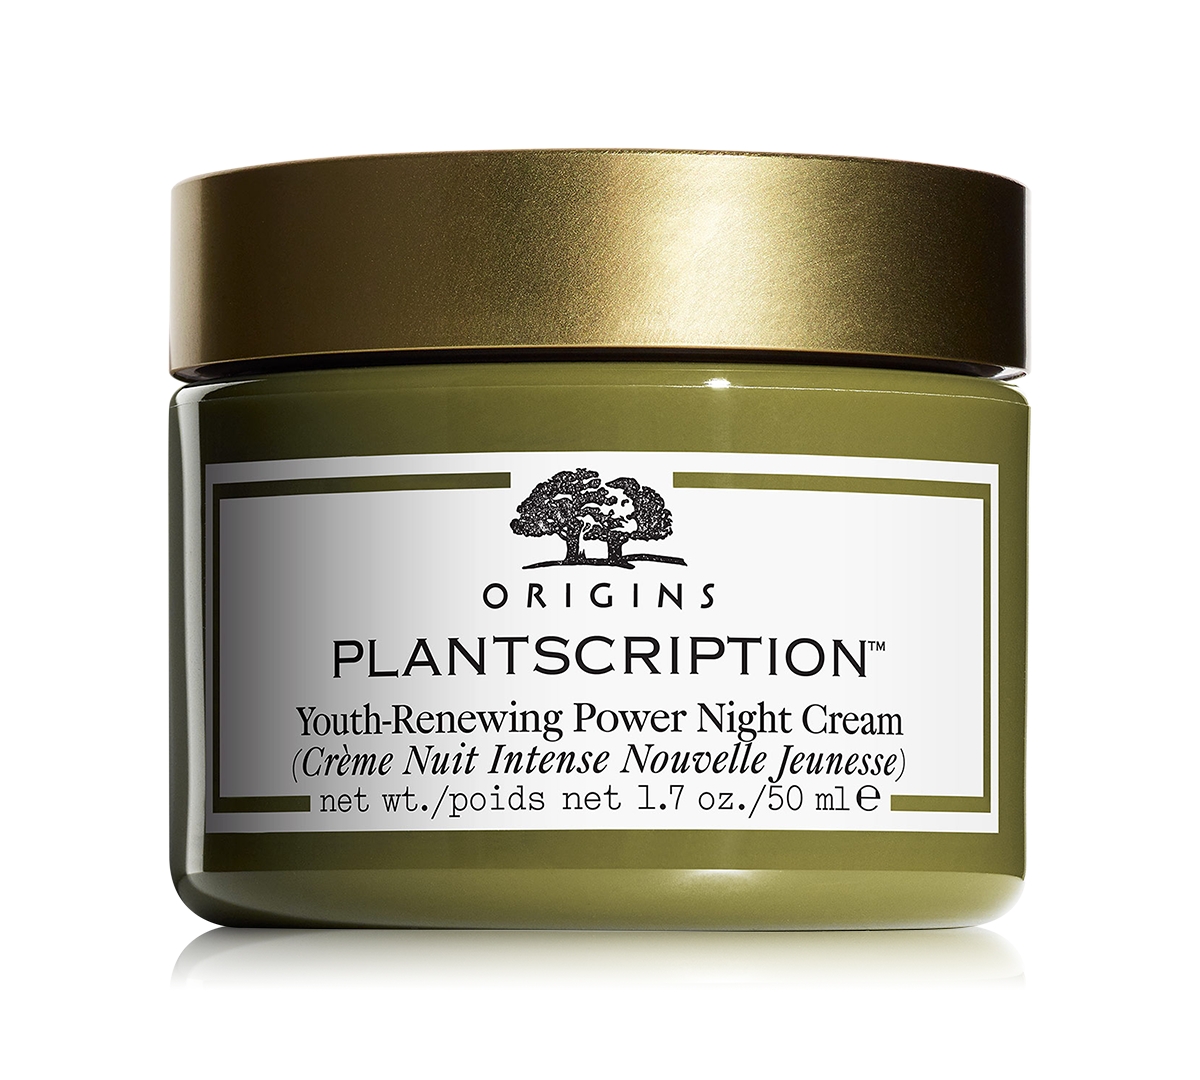 Plantscription Power Night Cream, 1.7 oz.